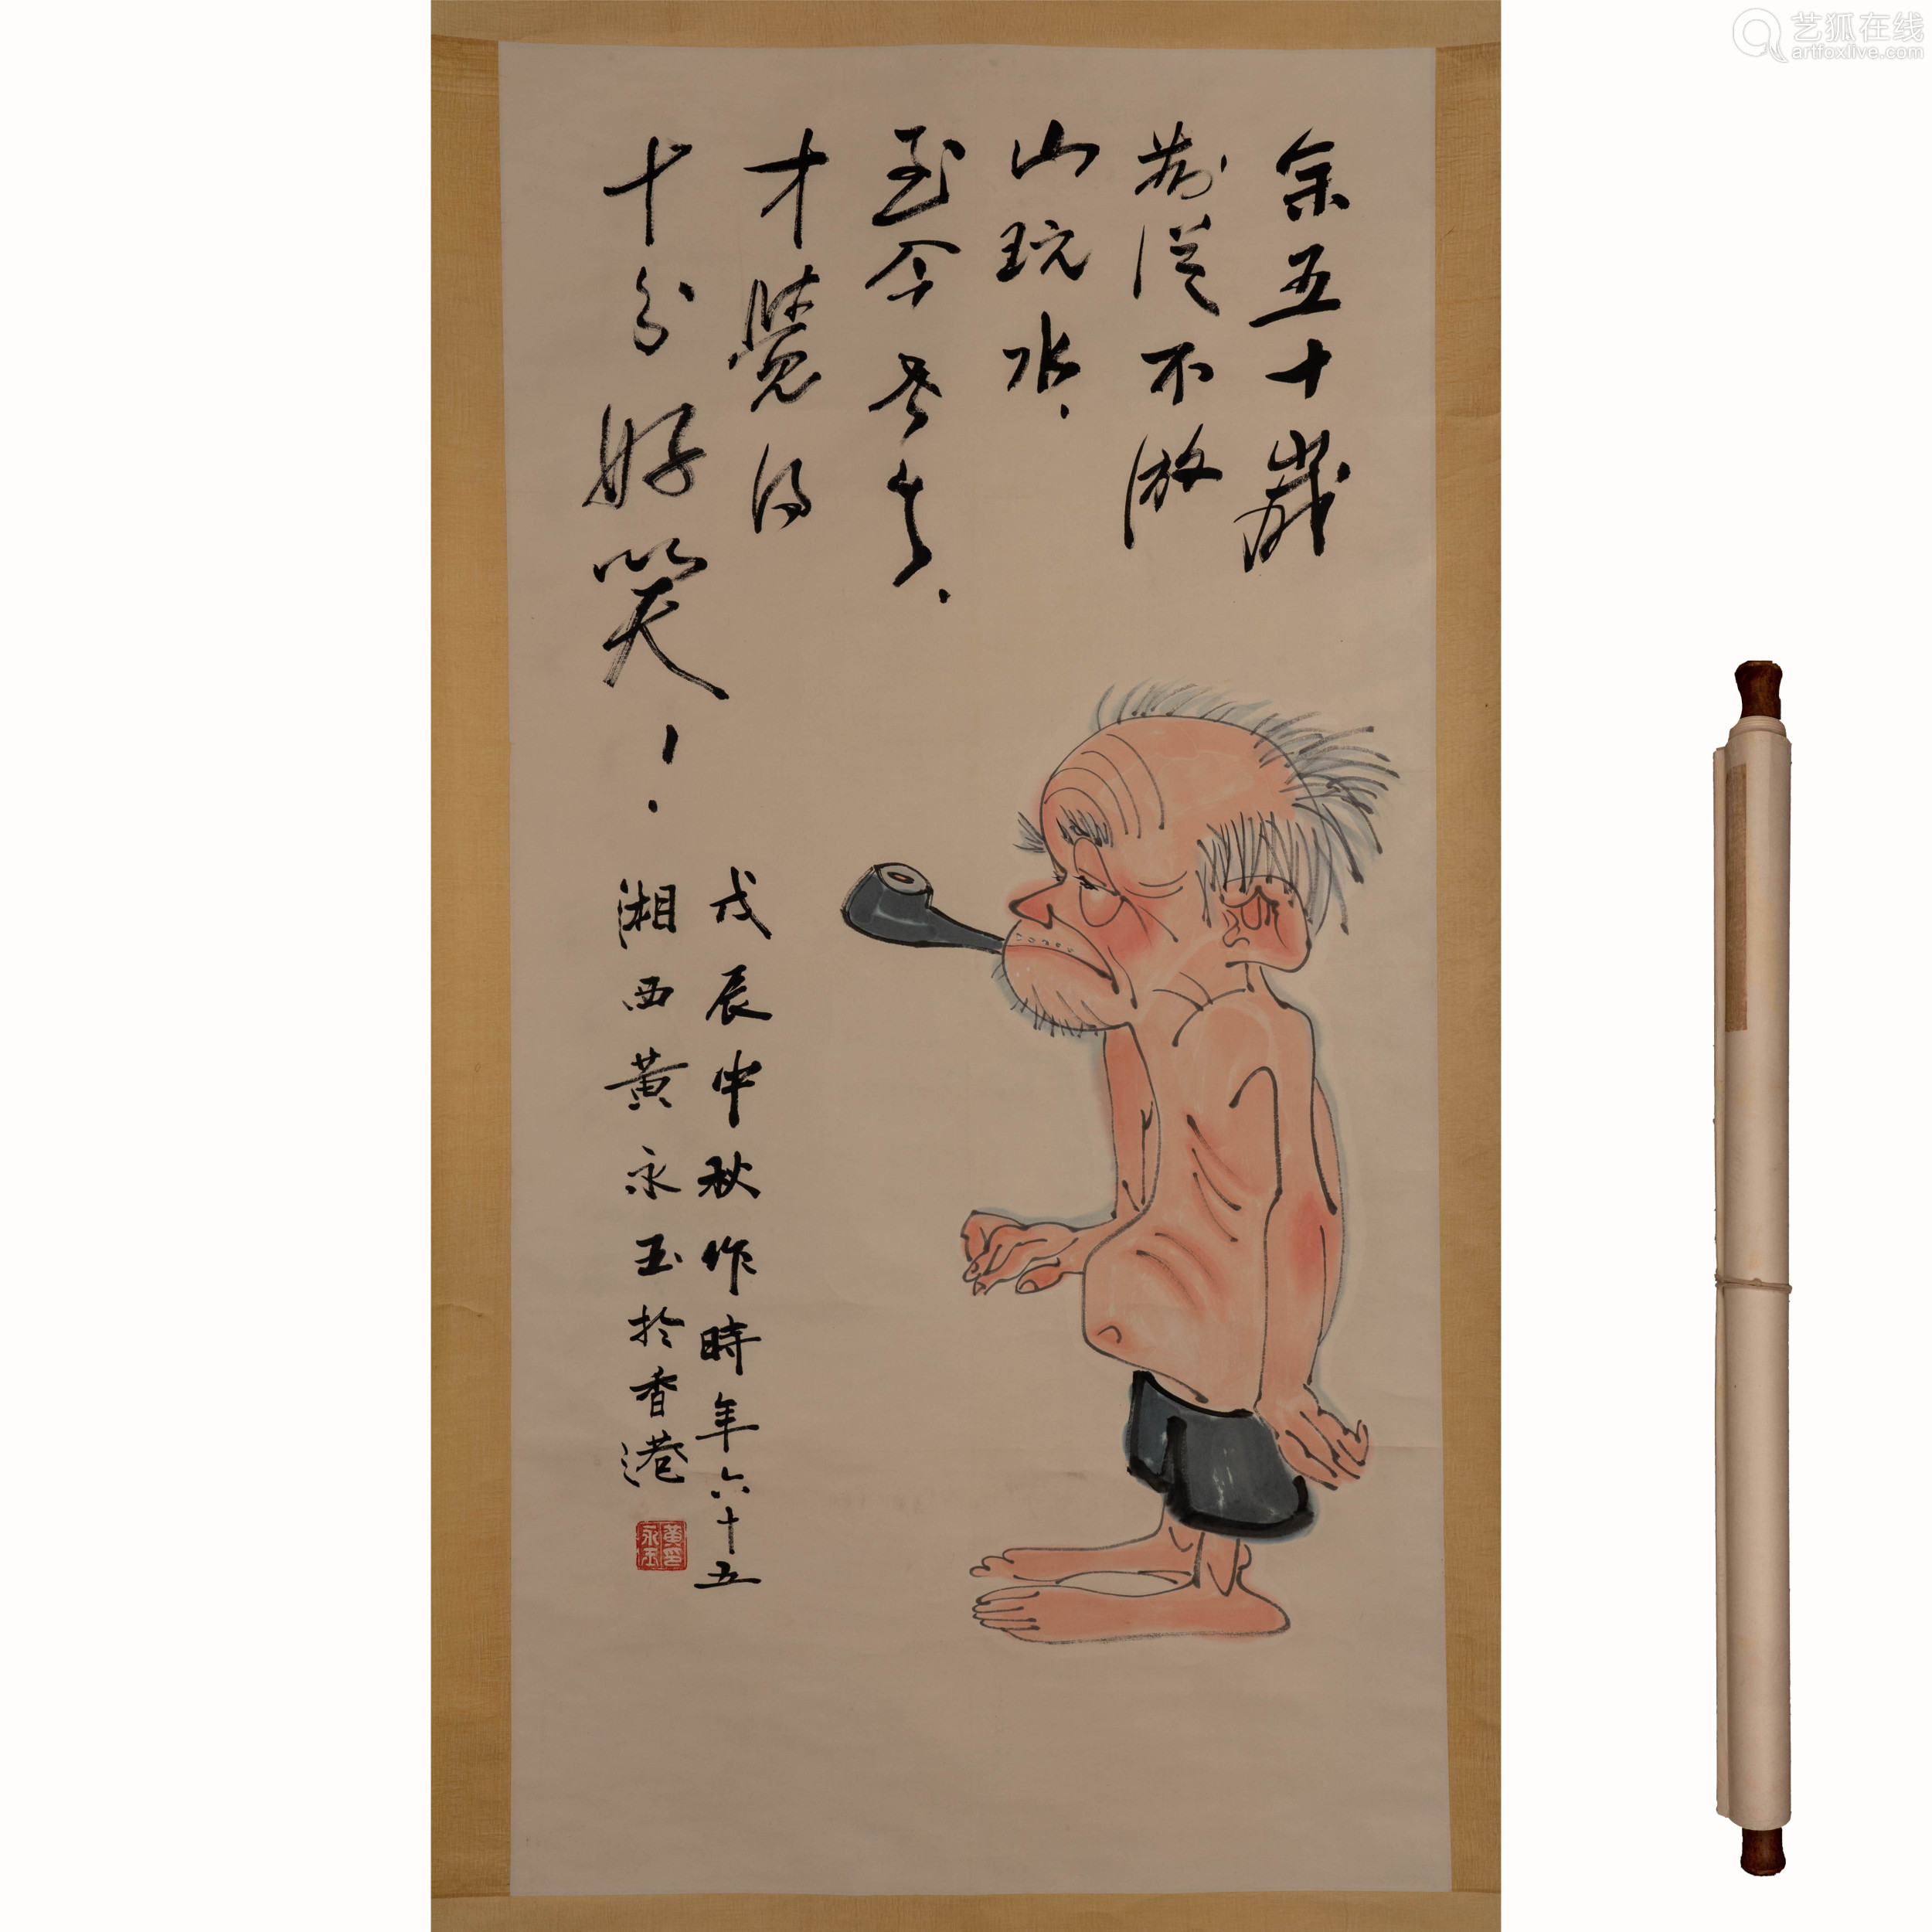 Huang Yongyu's character vertical scroll